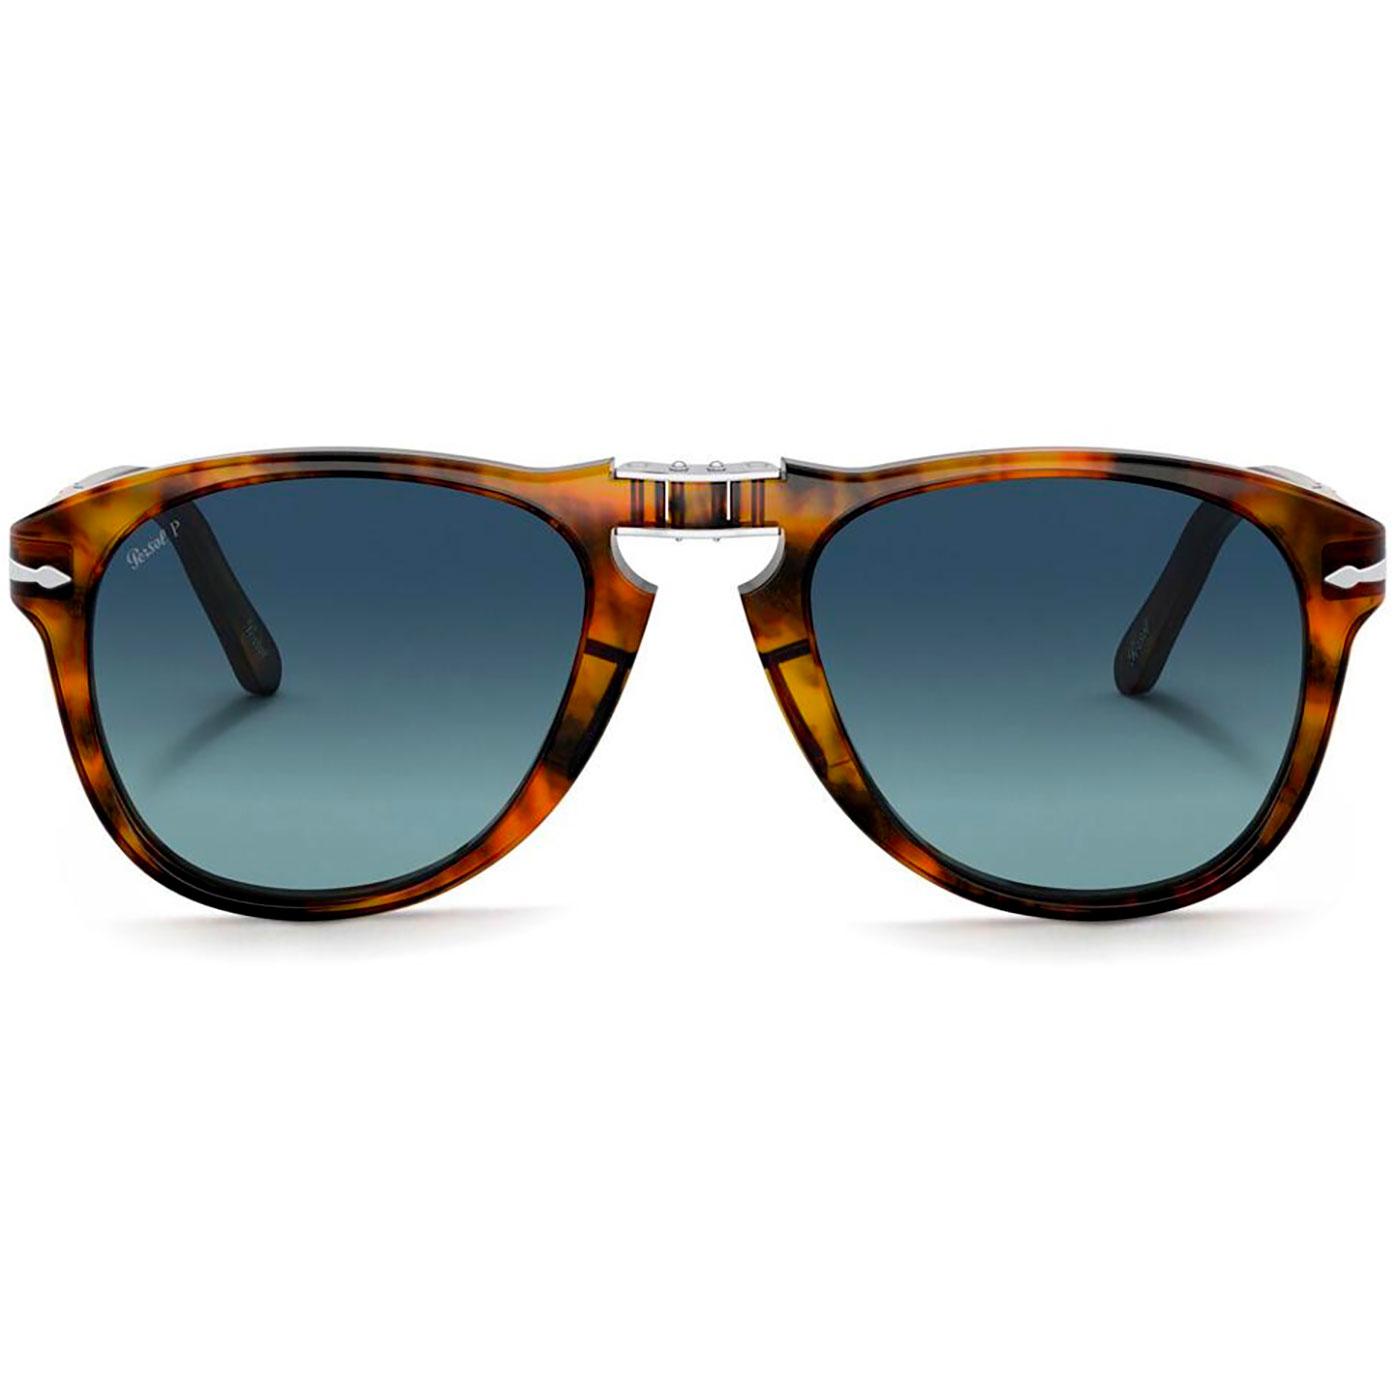 PERSOL Steve McQueen 714SM Sunglasses (Caffe)